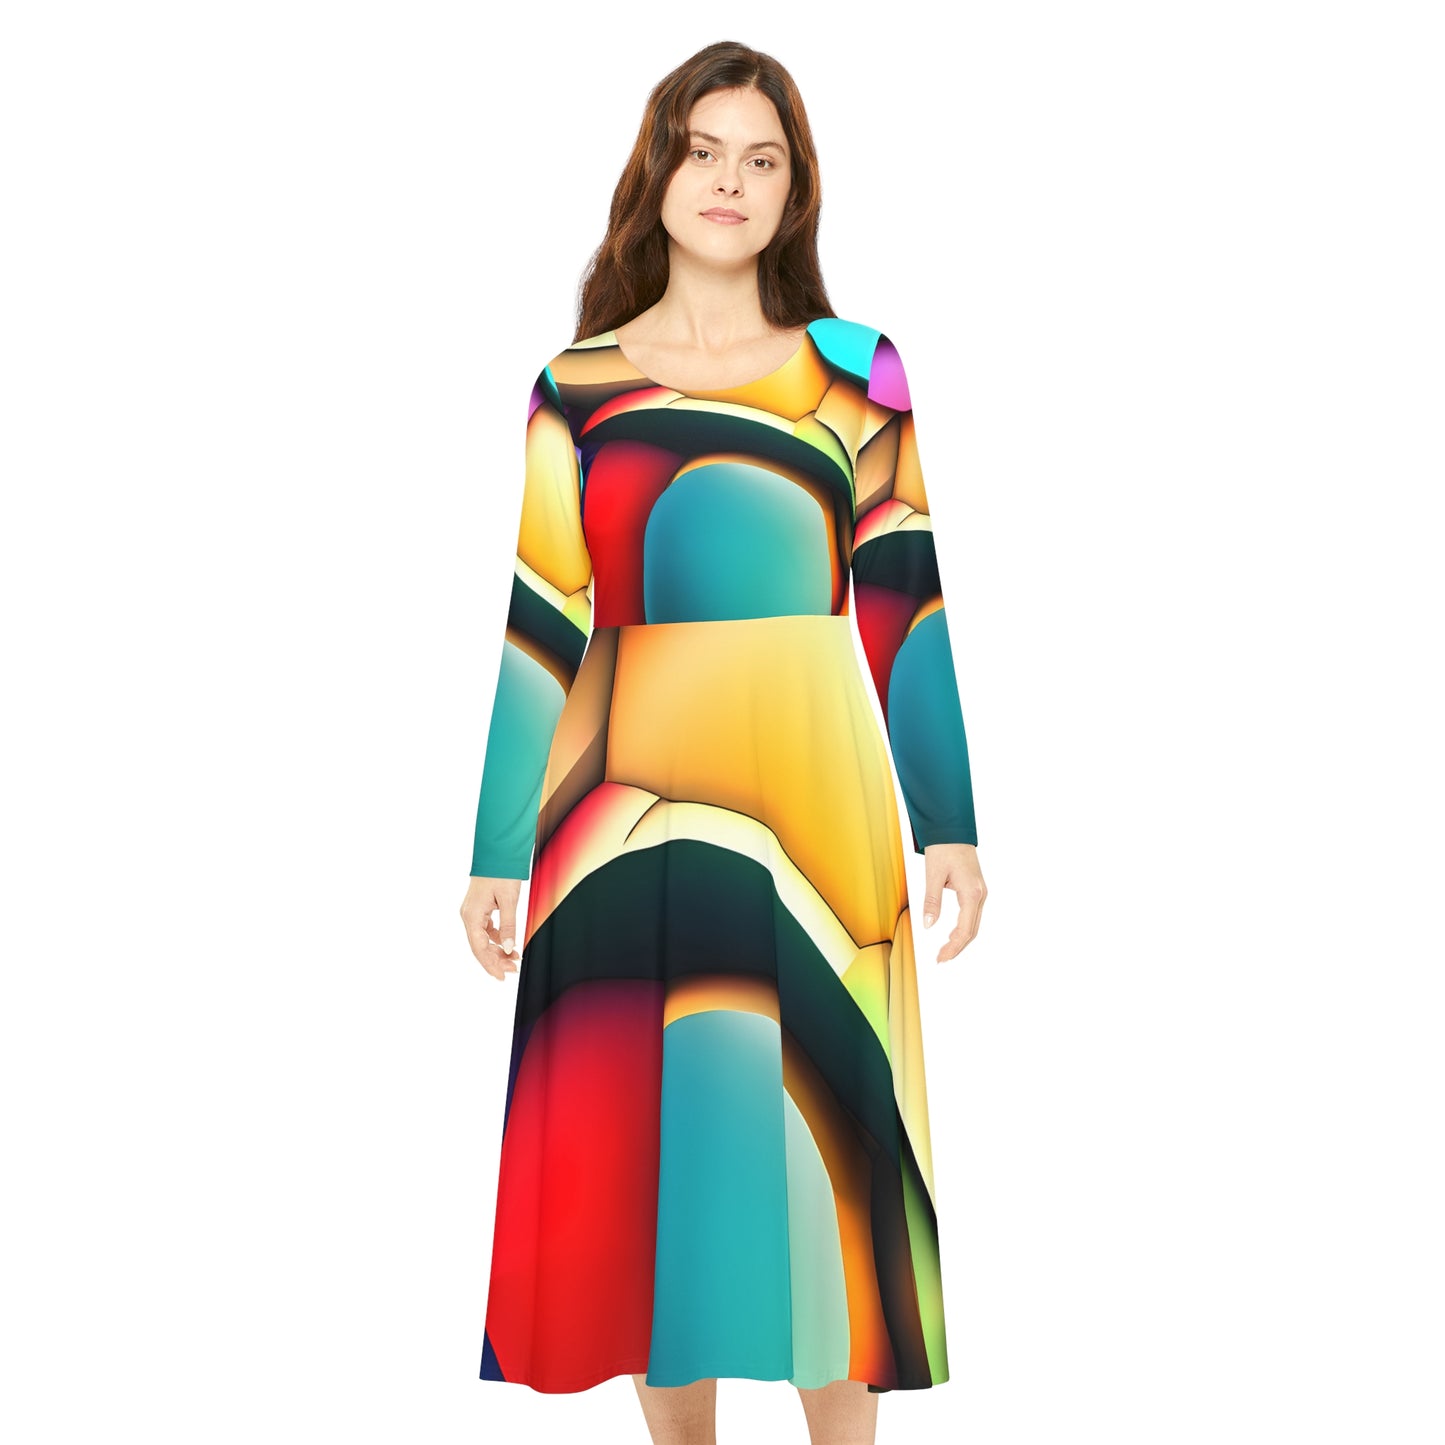 Fashion Women's Long Sleeve Dance Dress (AOP) - Multicolor